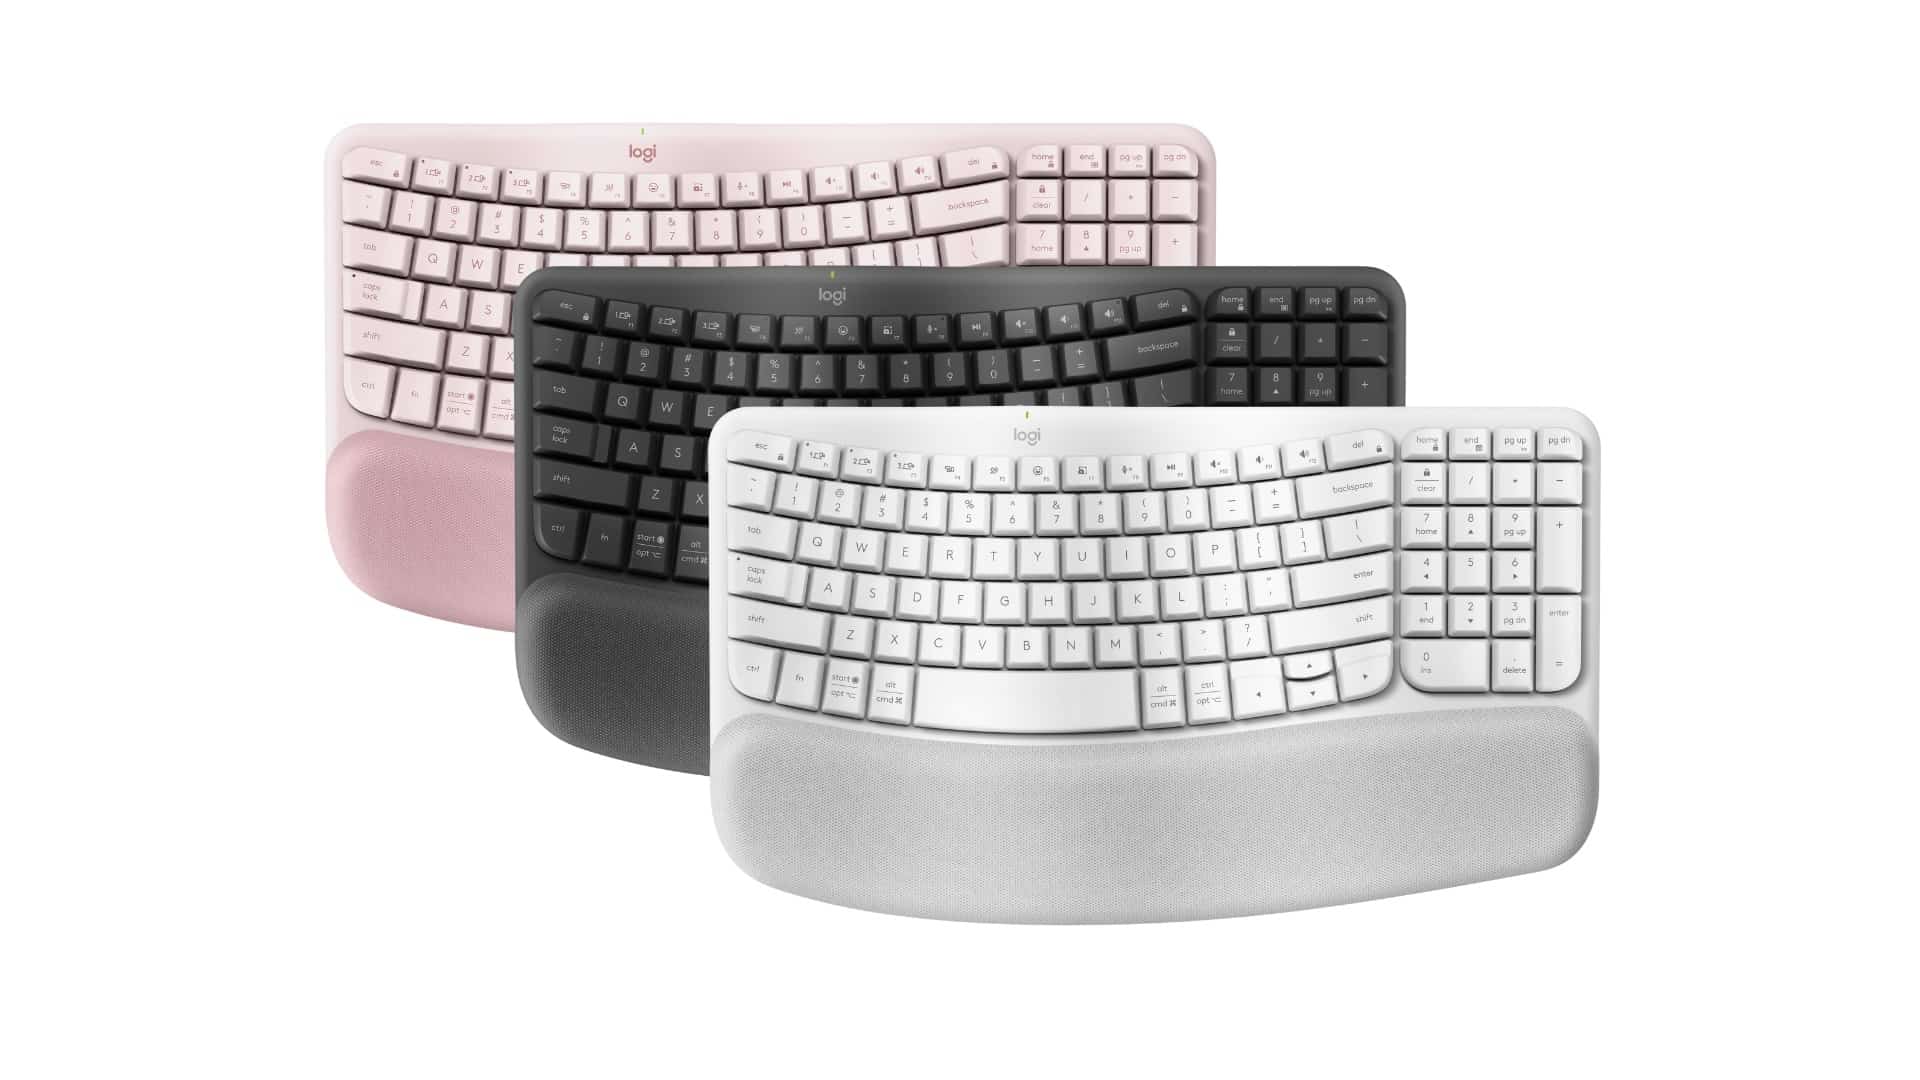 Logitech launches its new Wave Keys ergonomic keyboard